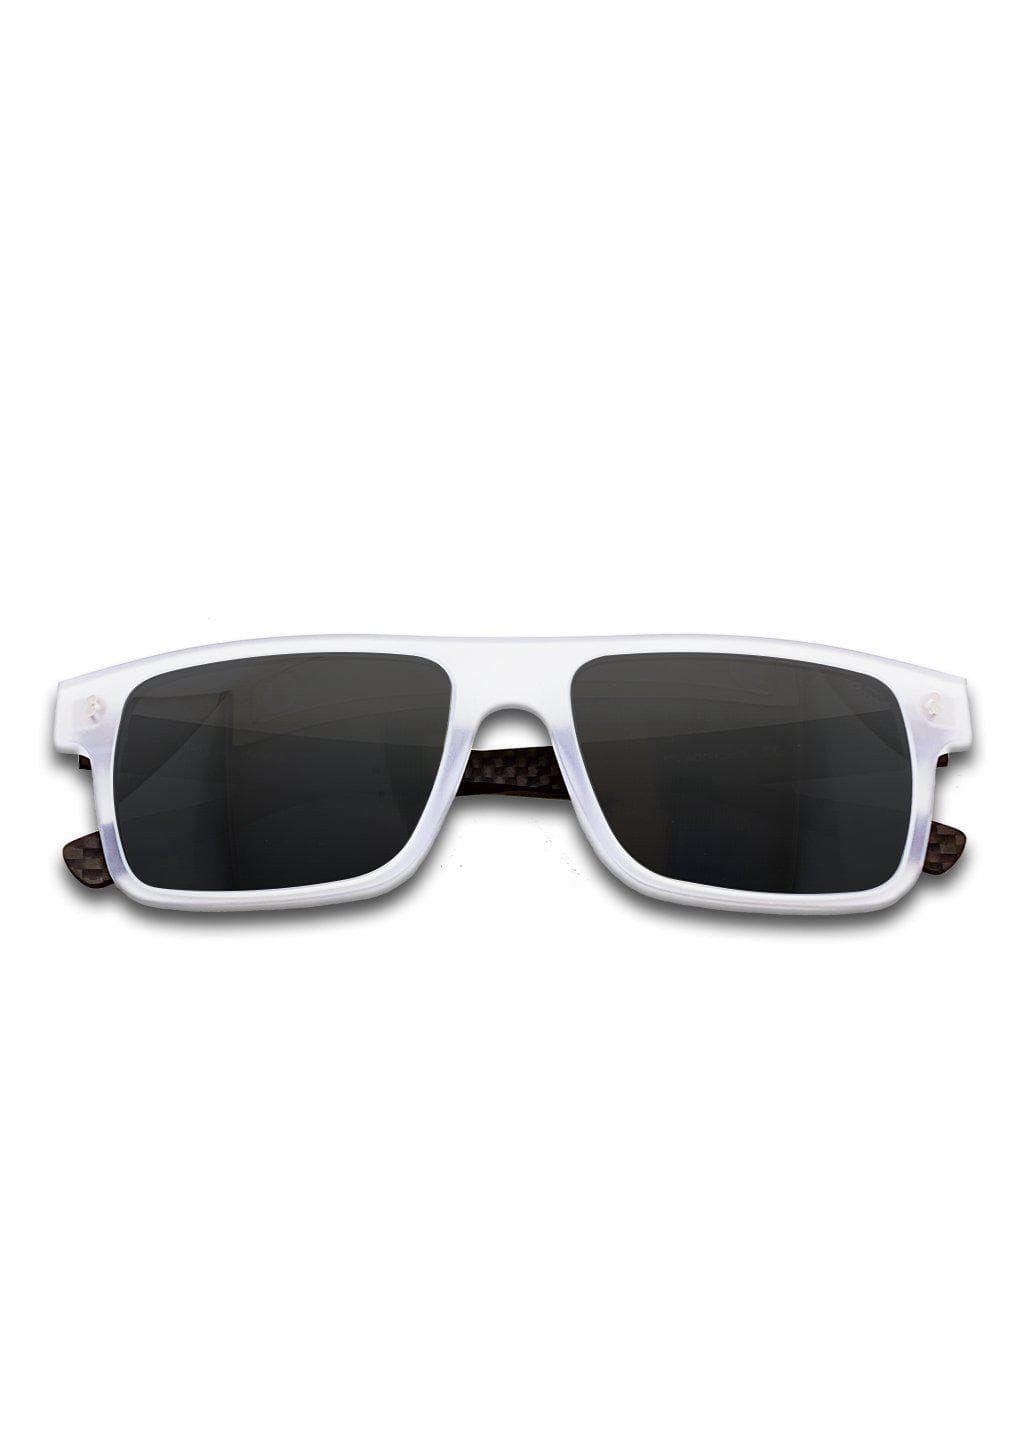 Hybrid - Cubic, carbon fiber and acetate sunglasses of the highest quality. Transparent frame and black lenses.